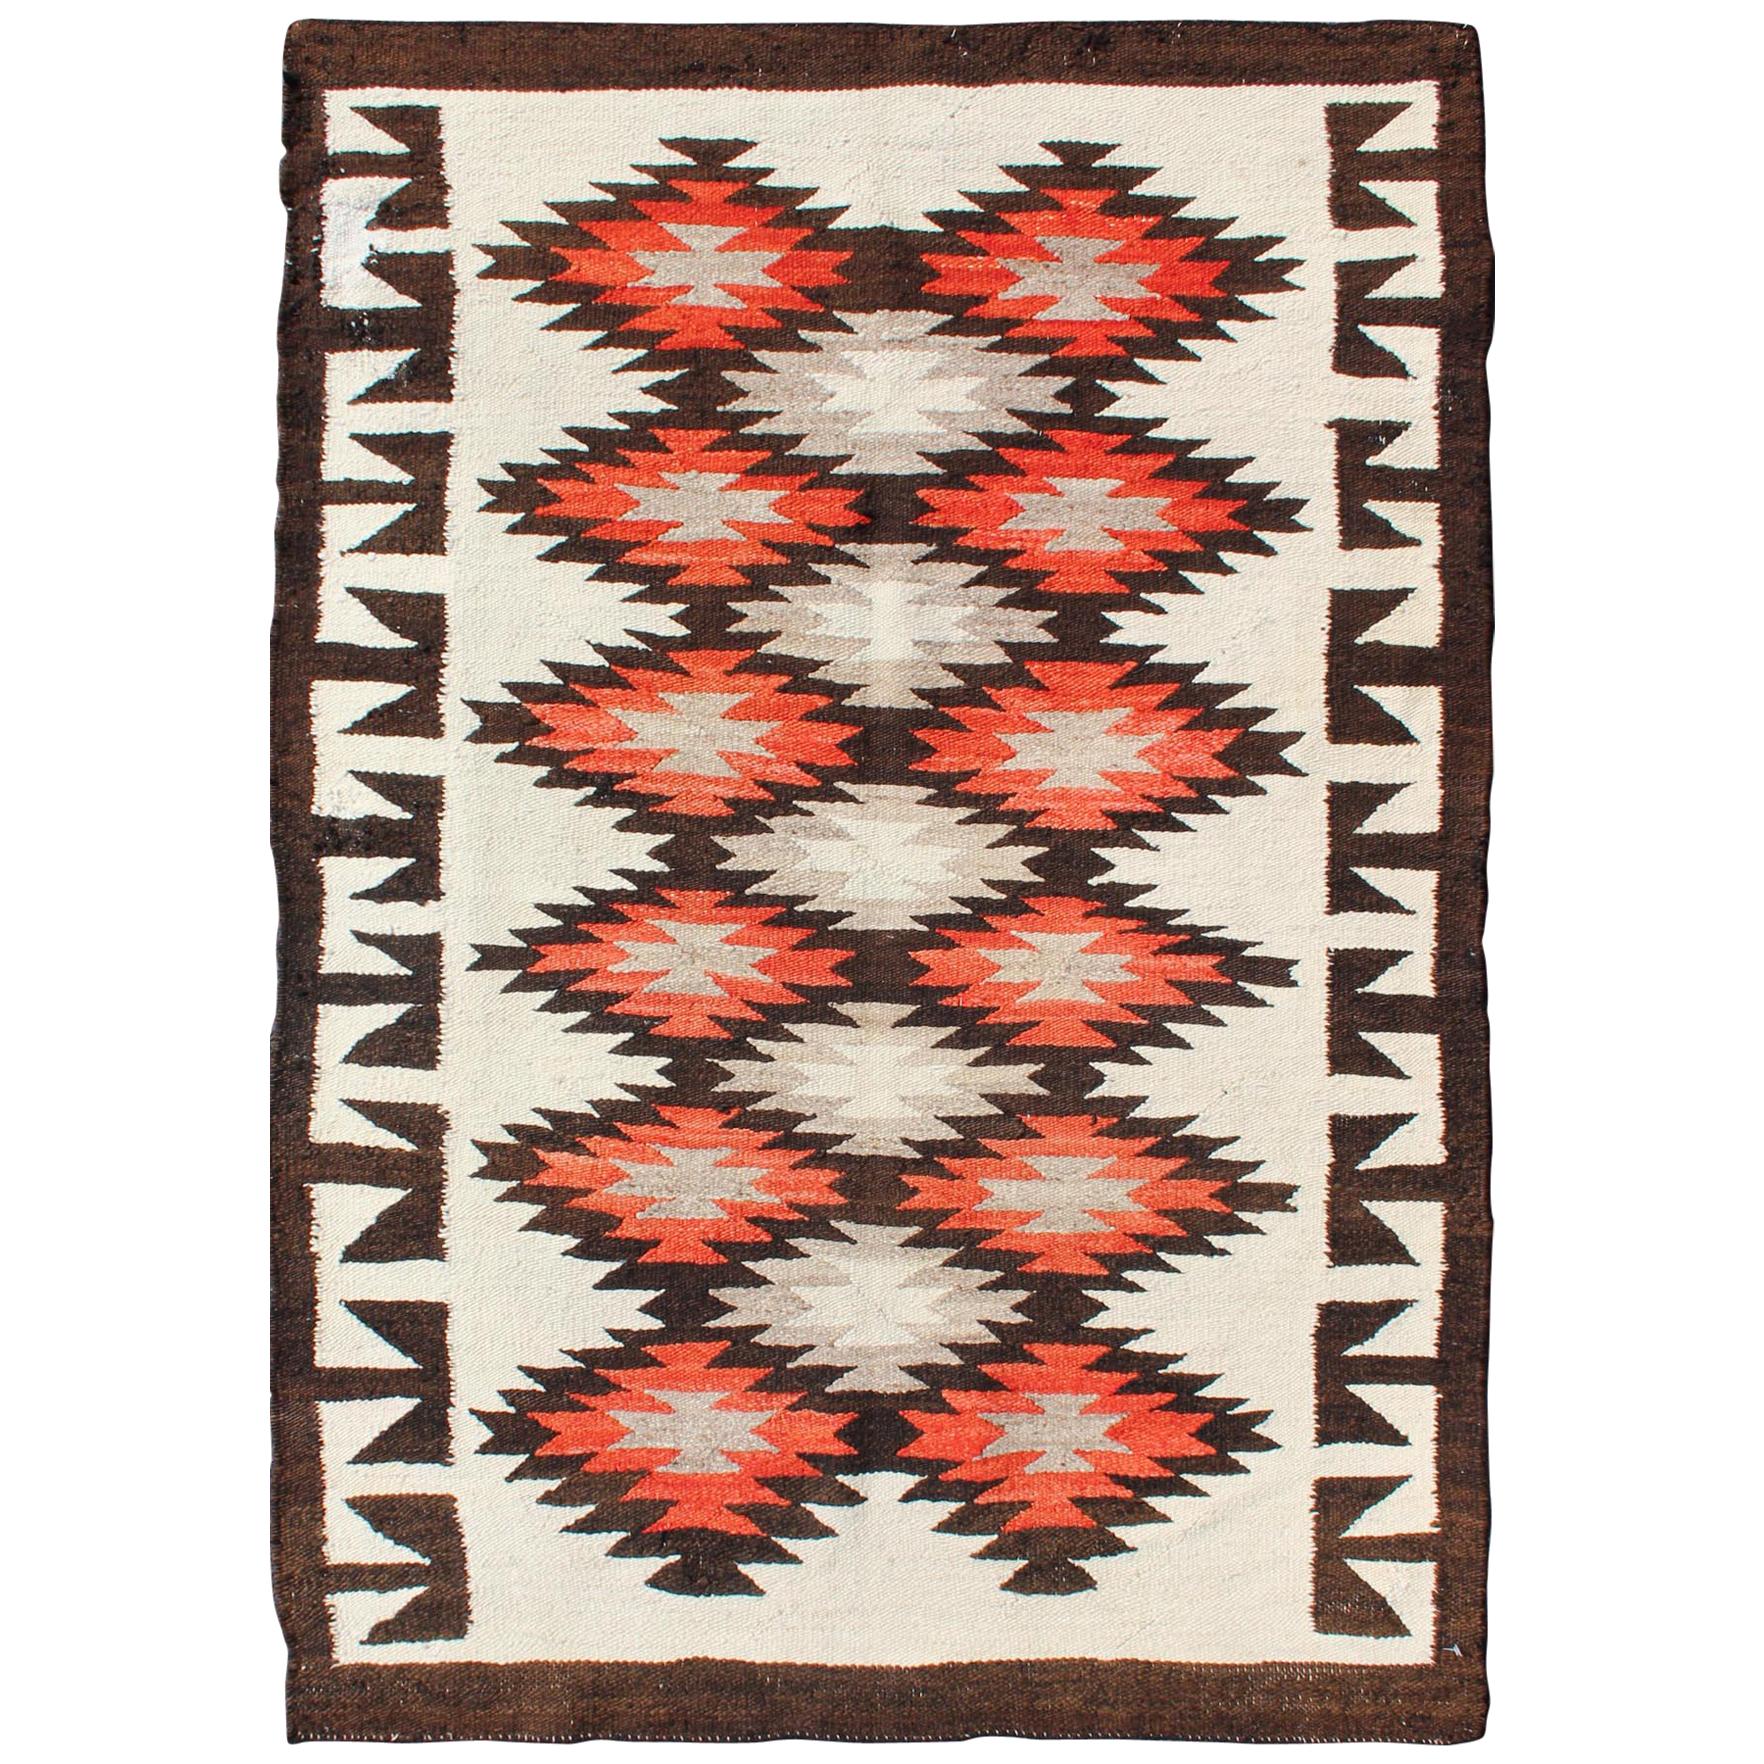 Vintage American Navajo Tribal Rug with Diamonds in Brown, Orange and Ivory